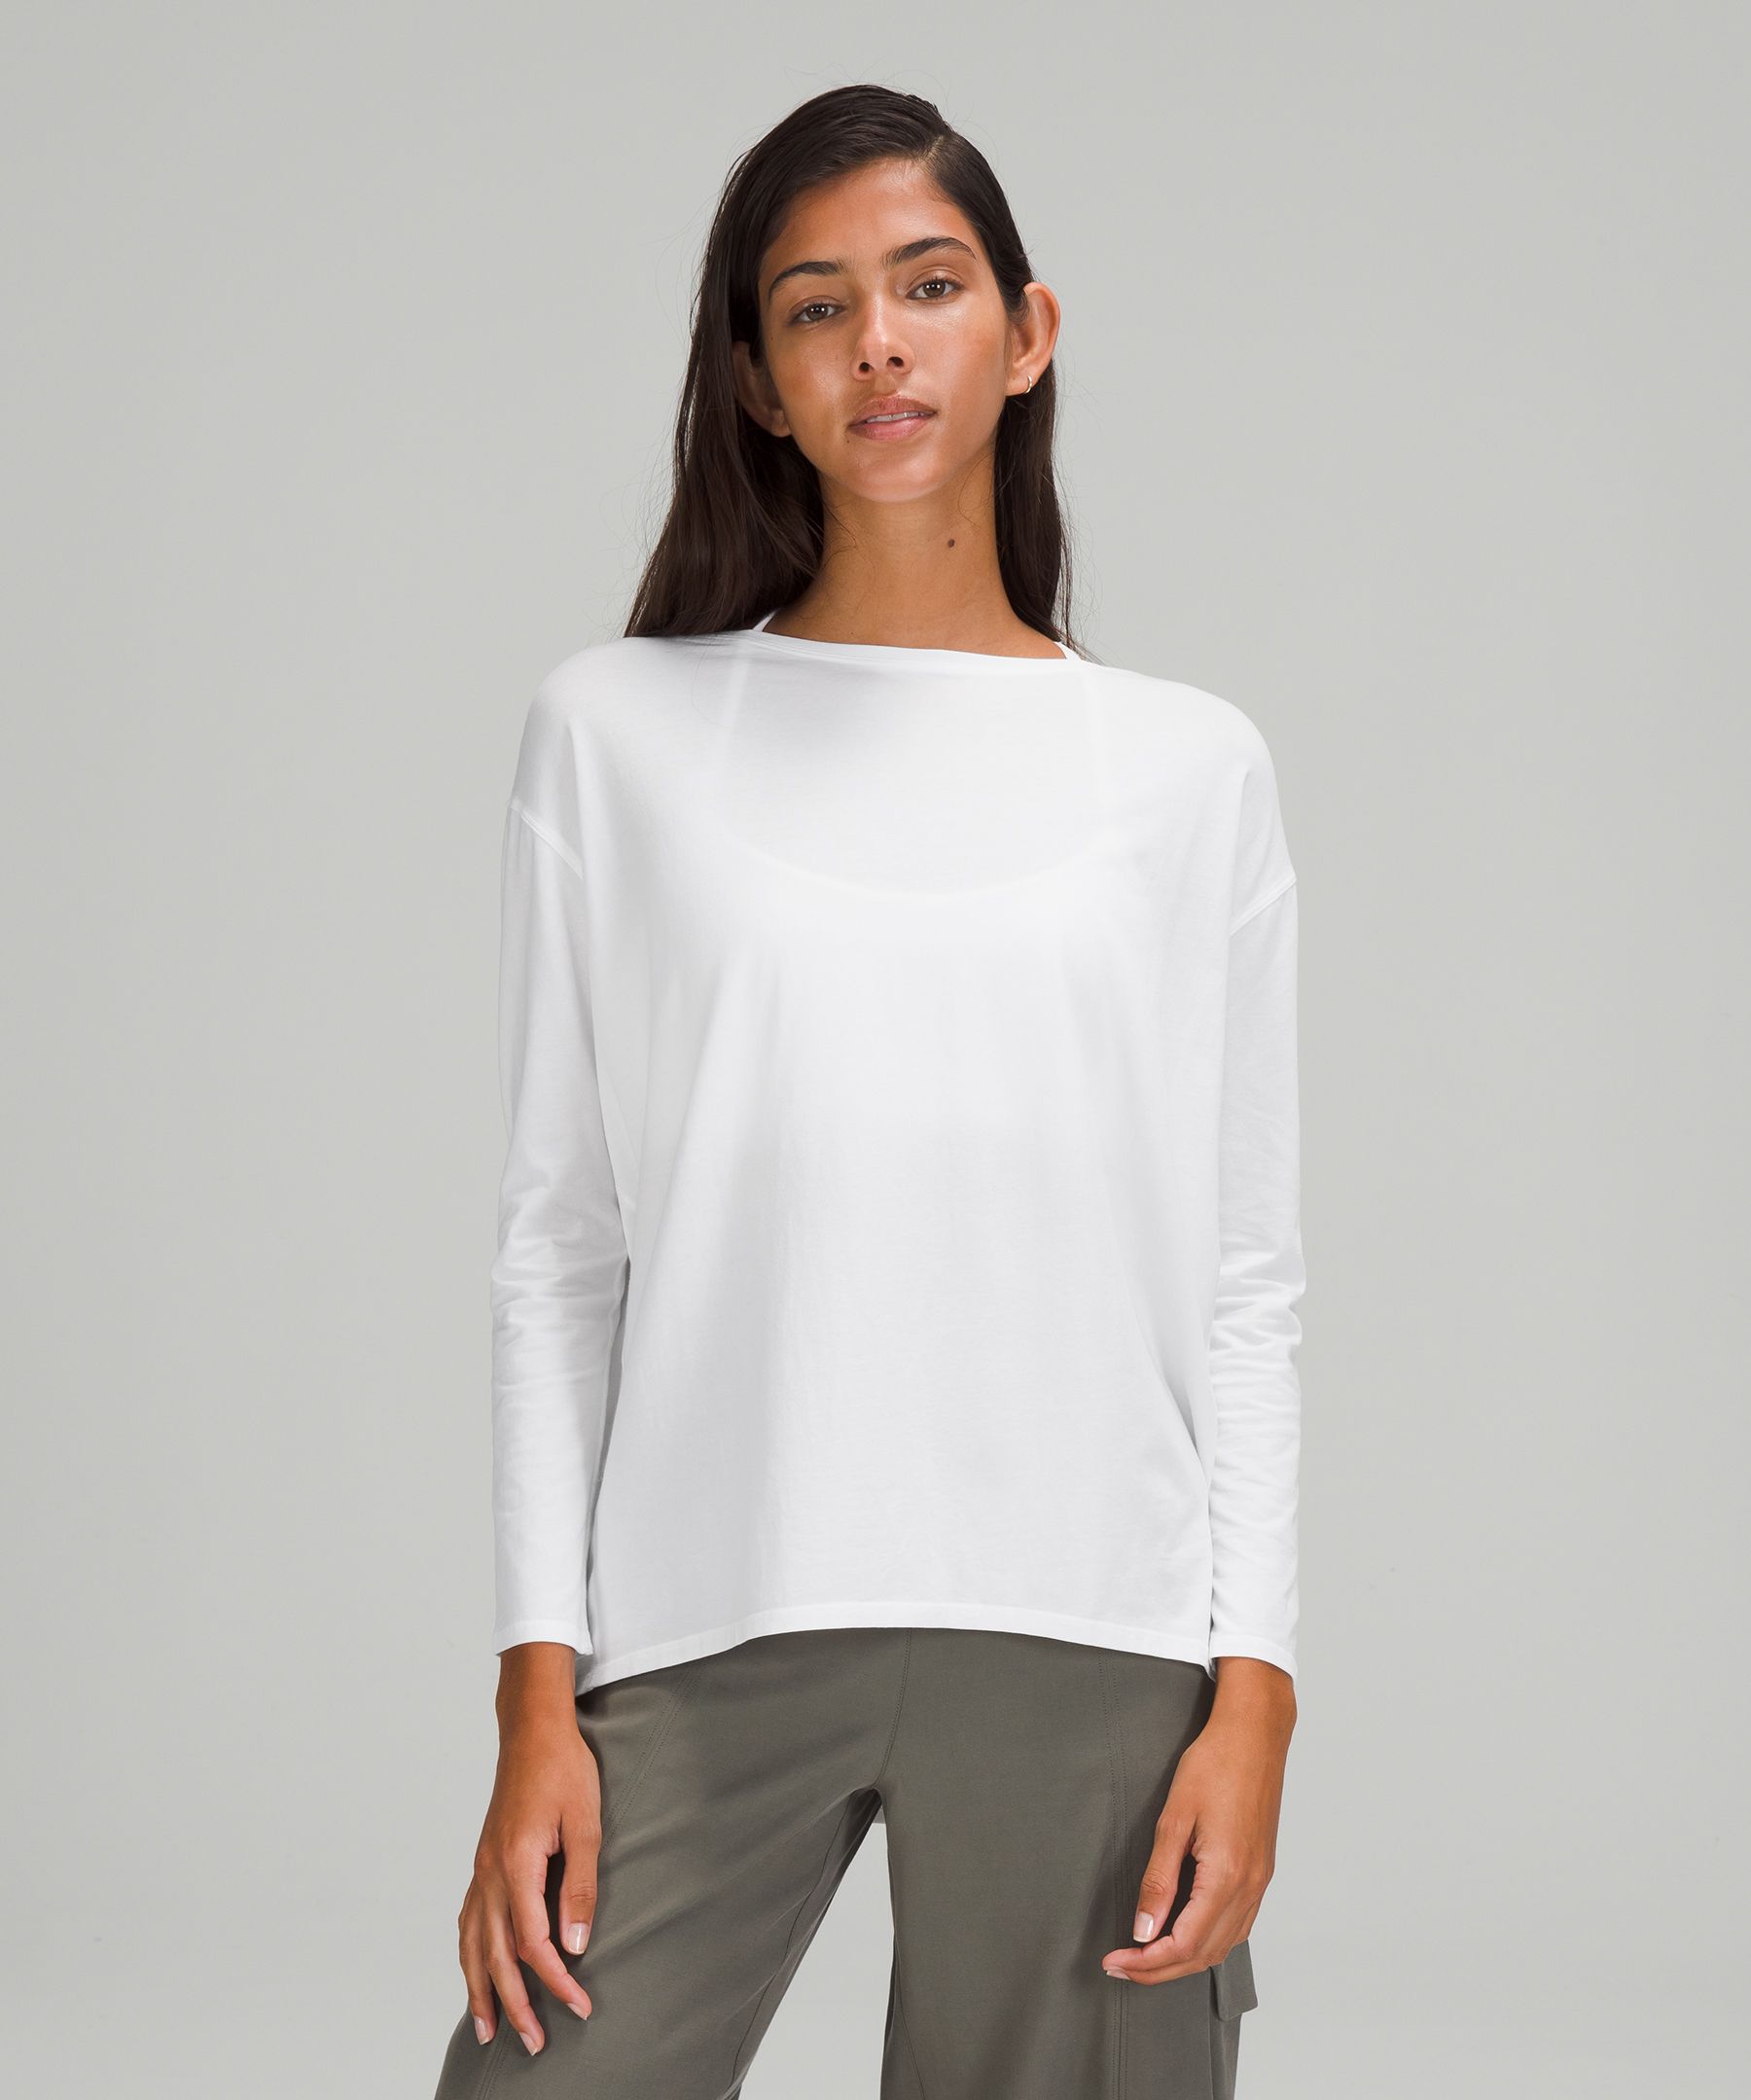 Slander Slippery average Women's Long Sleeve Shirts | lululemon